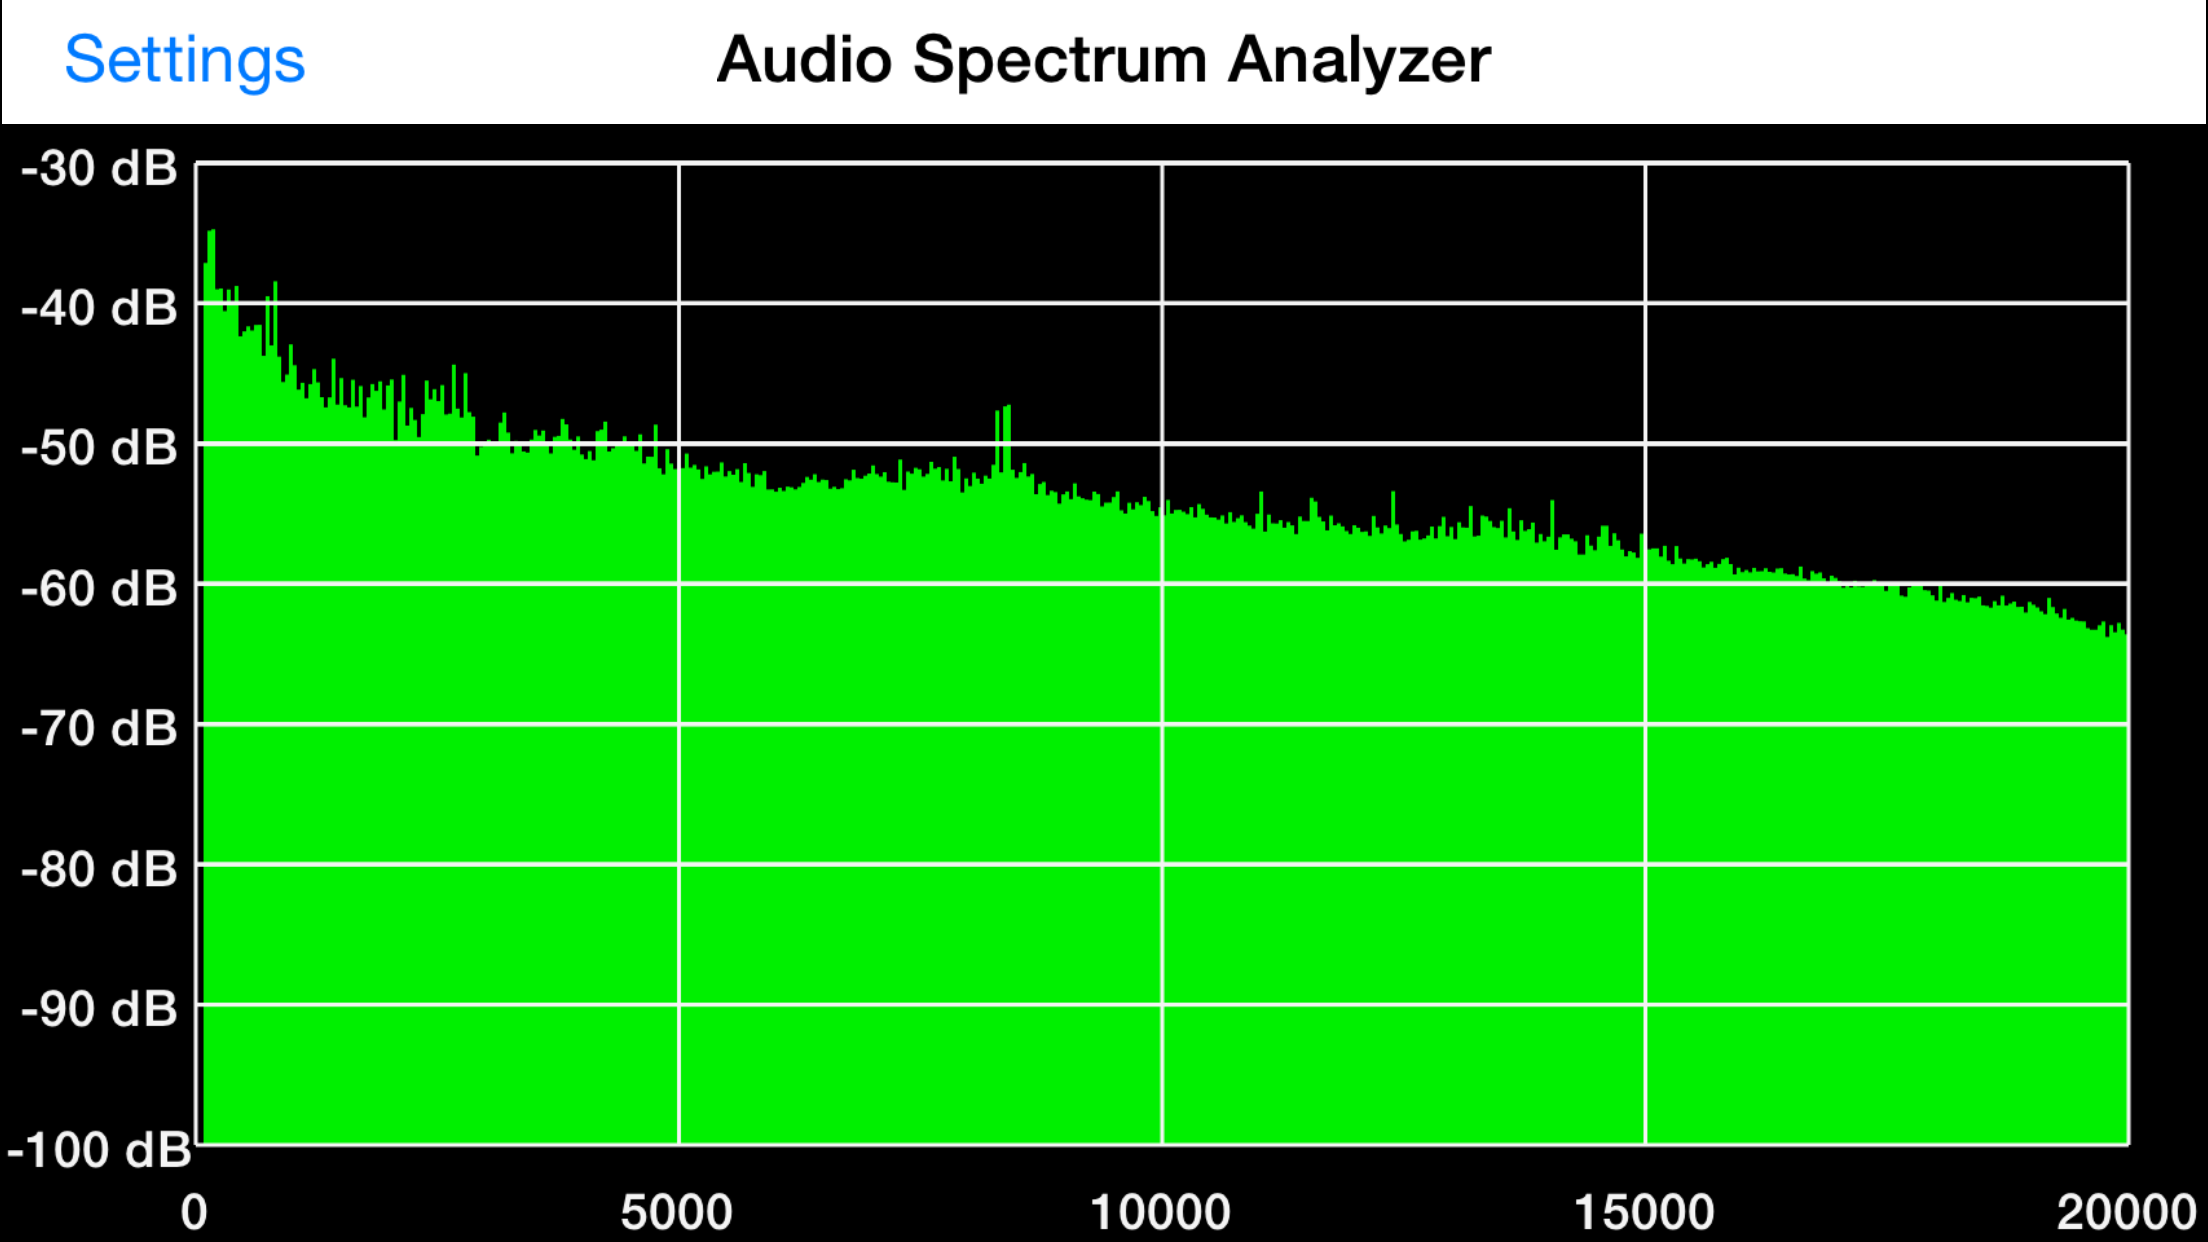 Spectrum Analyzer result for Tidal HiFi